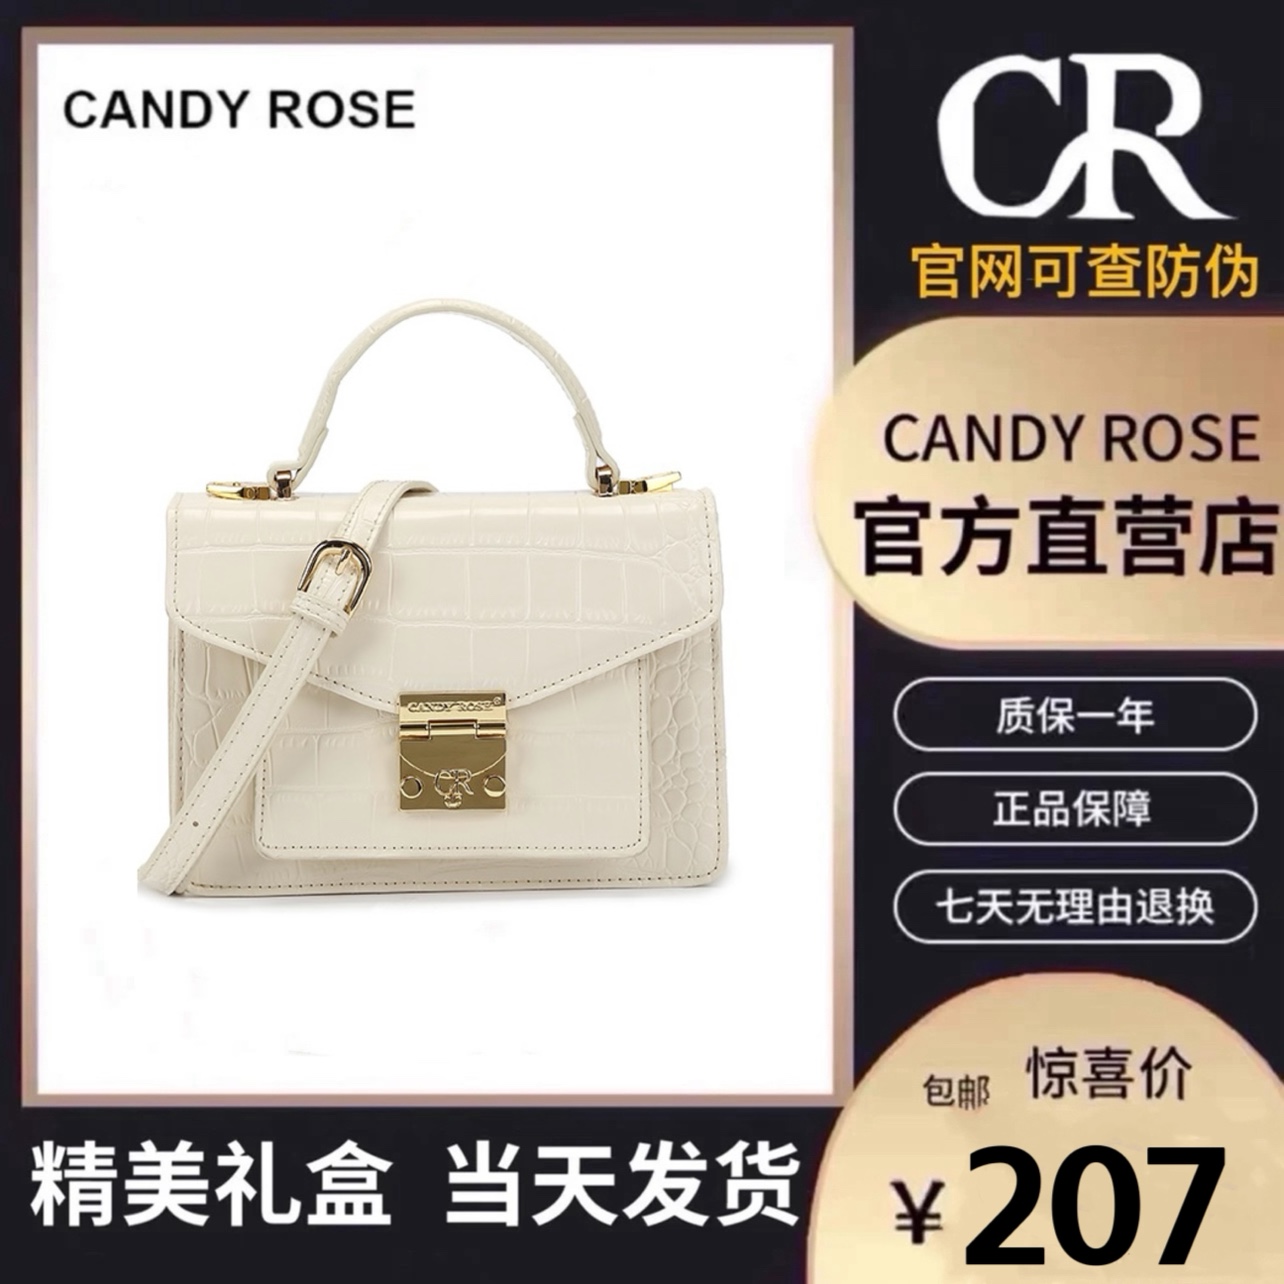 CandyRose CR新款官网斜挎包邮差包手提包鳄鱼纹金属扣夏紫棕白